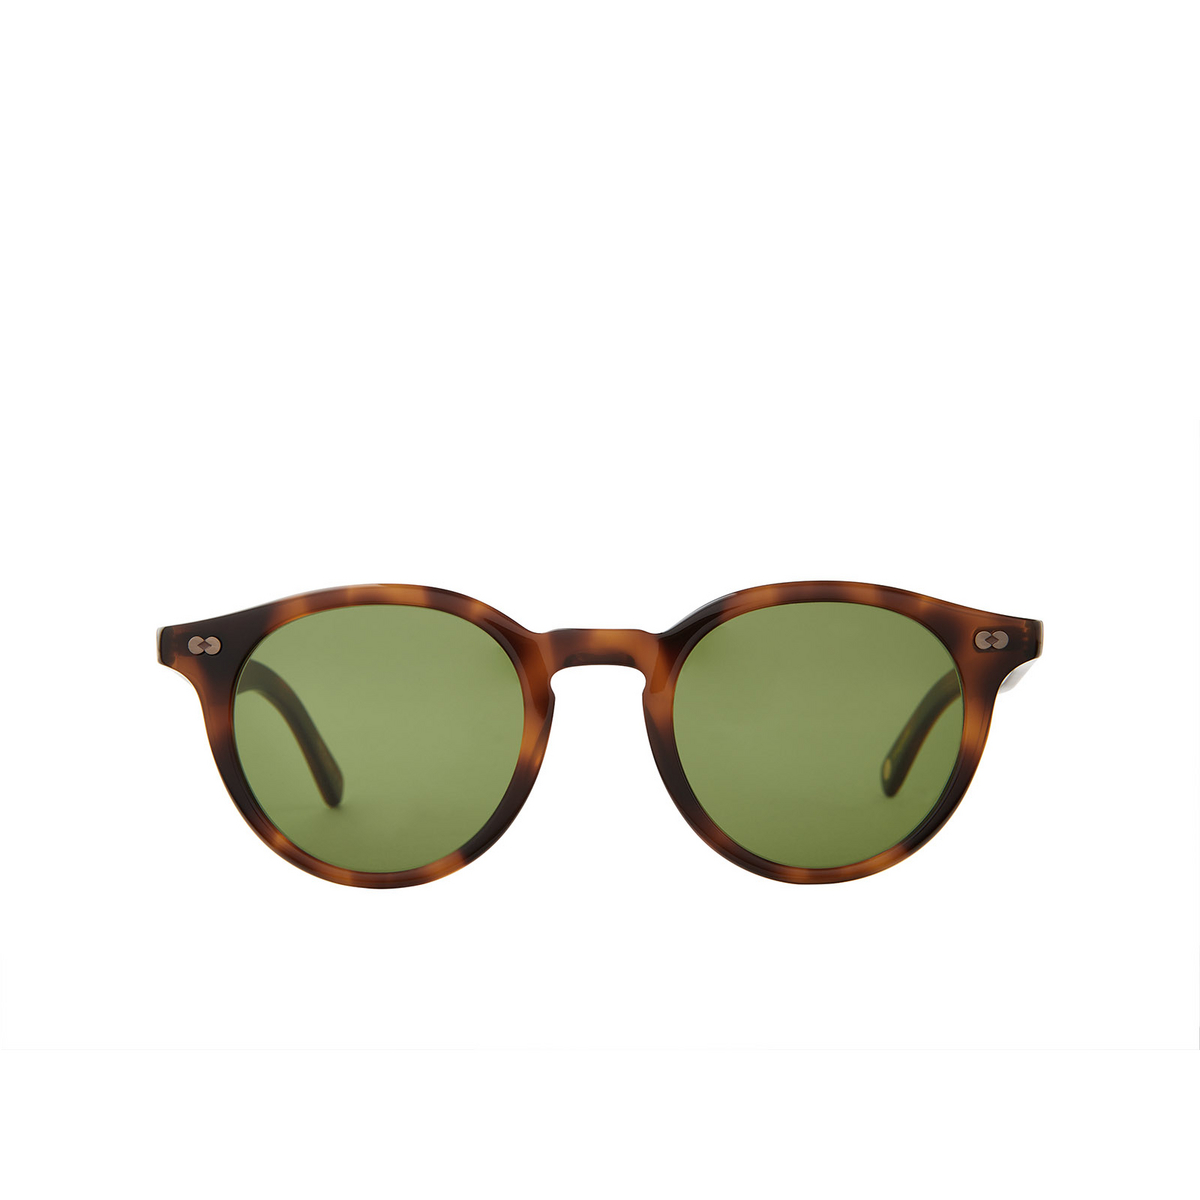 Garrett Leight CLUNE X Sunglasses SPBRNSH/PGN Spotted Brown Shell - front view